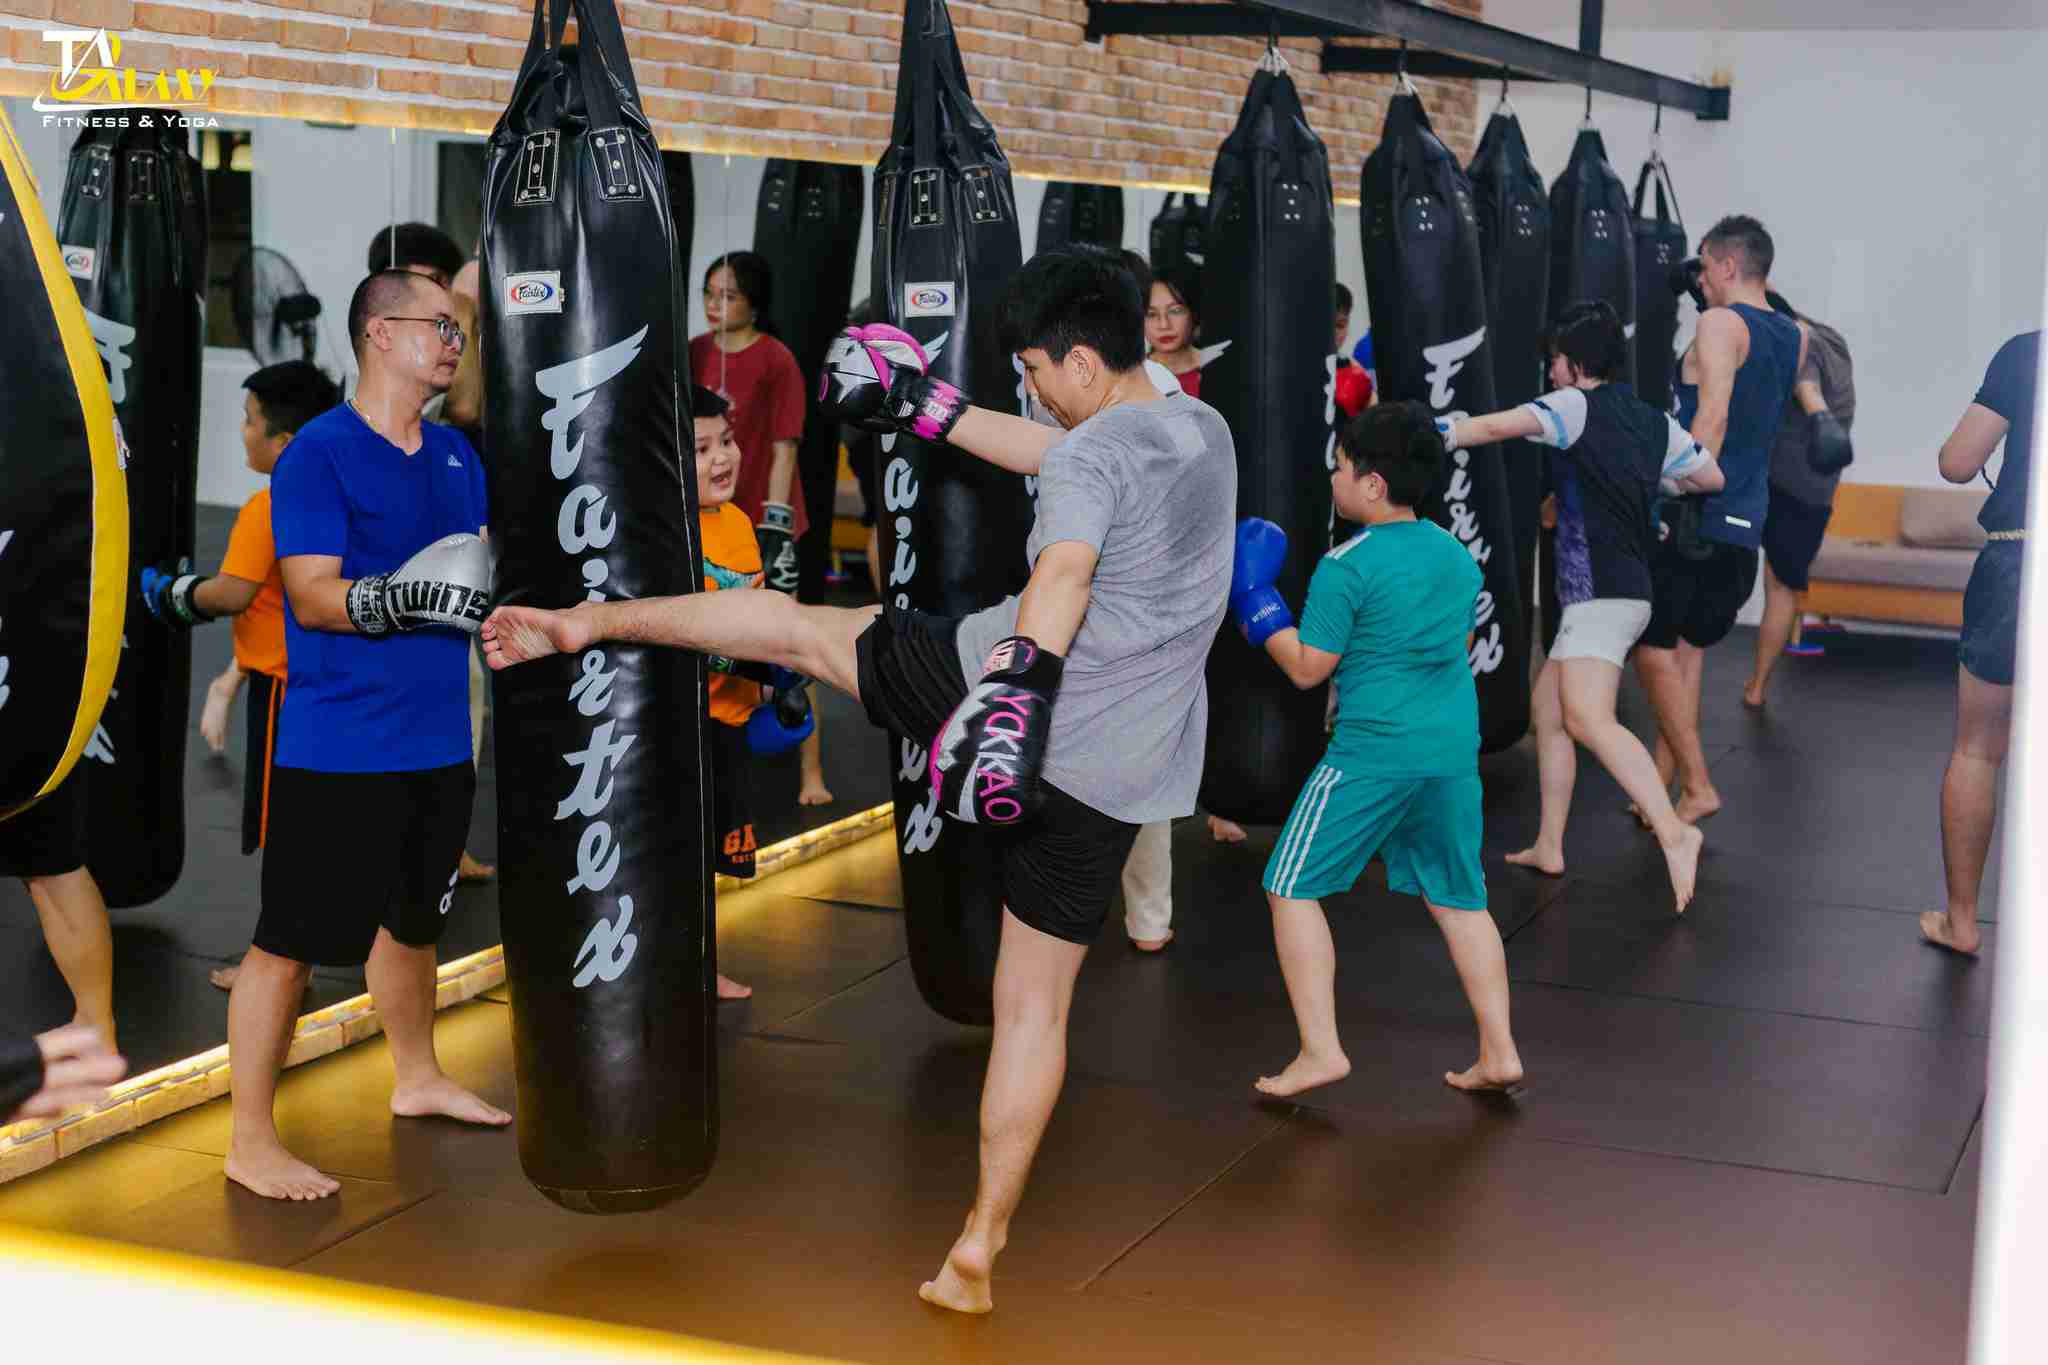  Mma Fighter Club & Kickfitness trung tâm dạy võ tự vệ